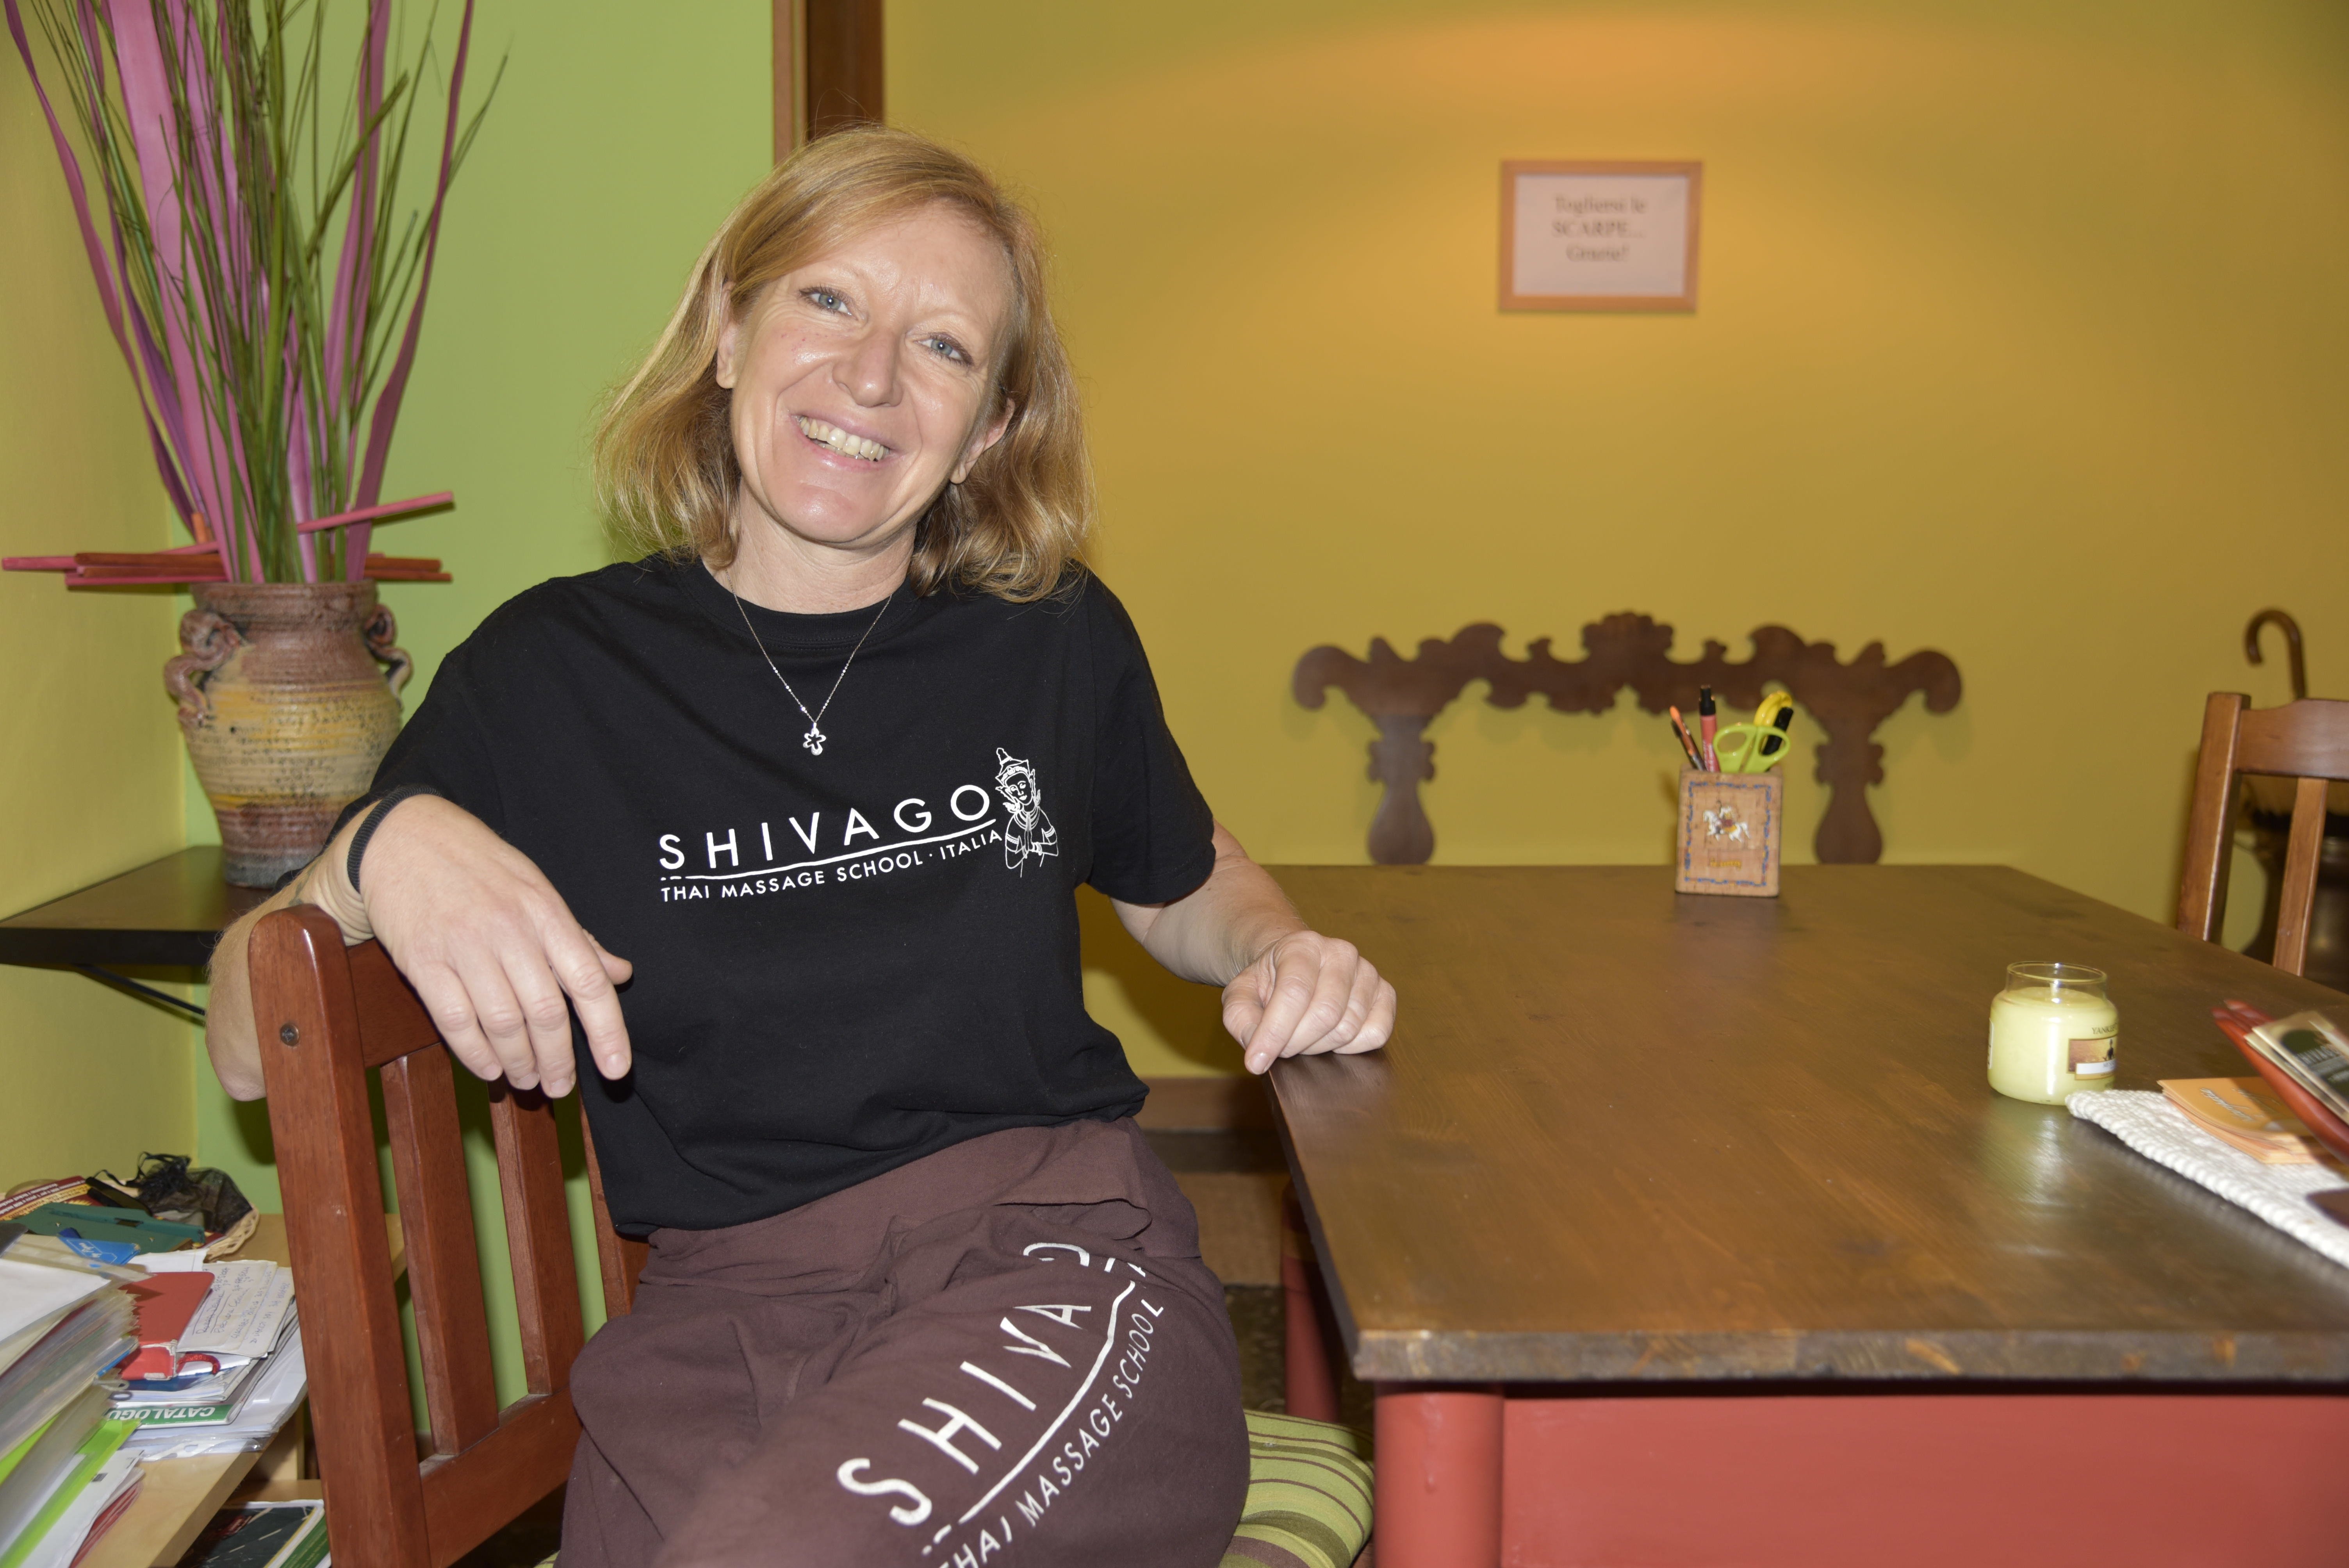 Shivago Thai Massage School Italia